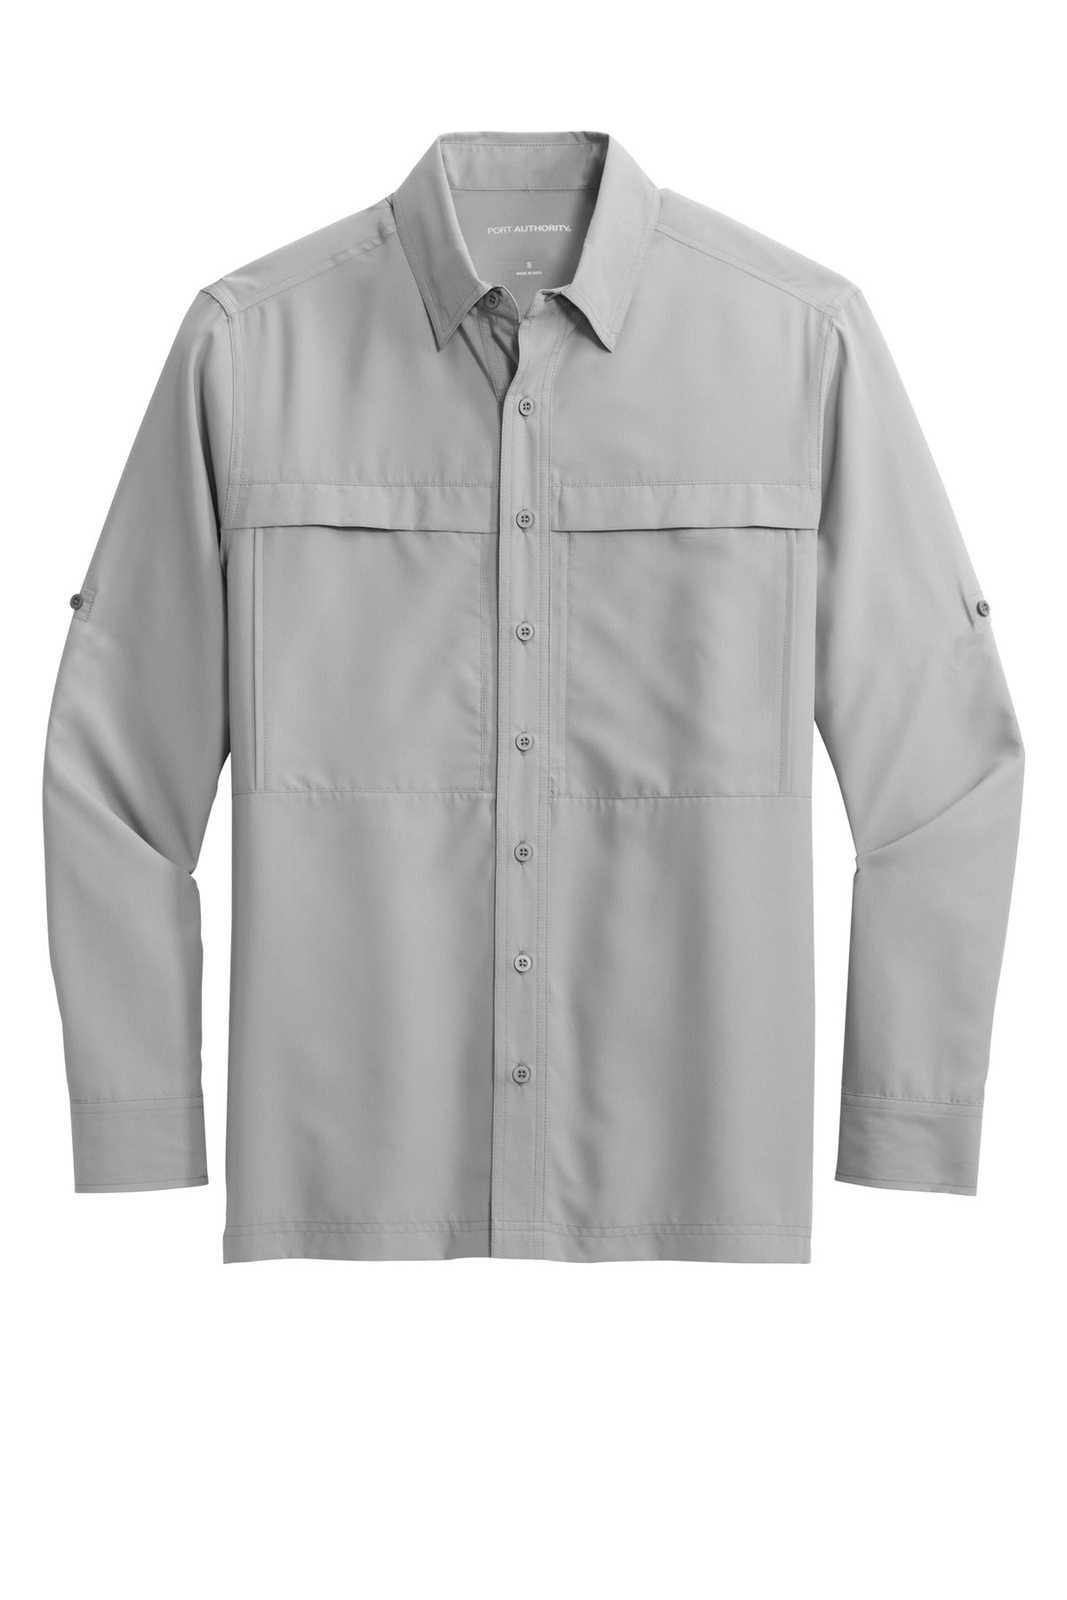 Port Authority W960 Long Sleeve UV Daybreak Shirt - Gusty Grey - HIT a Double - 2